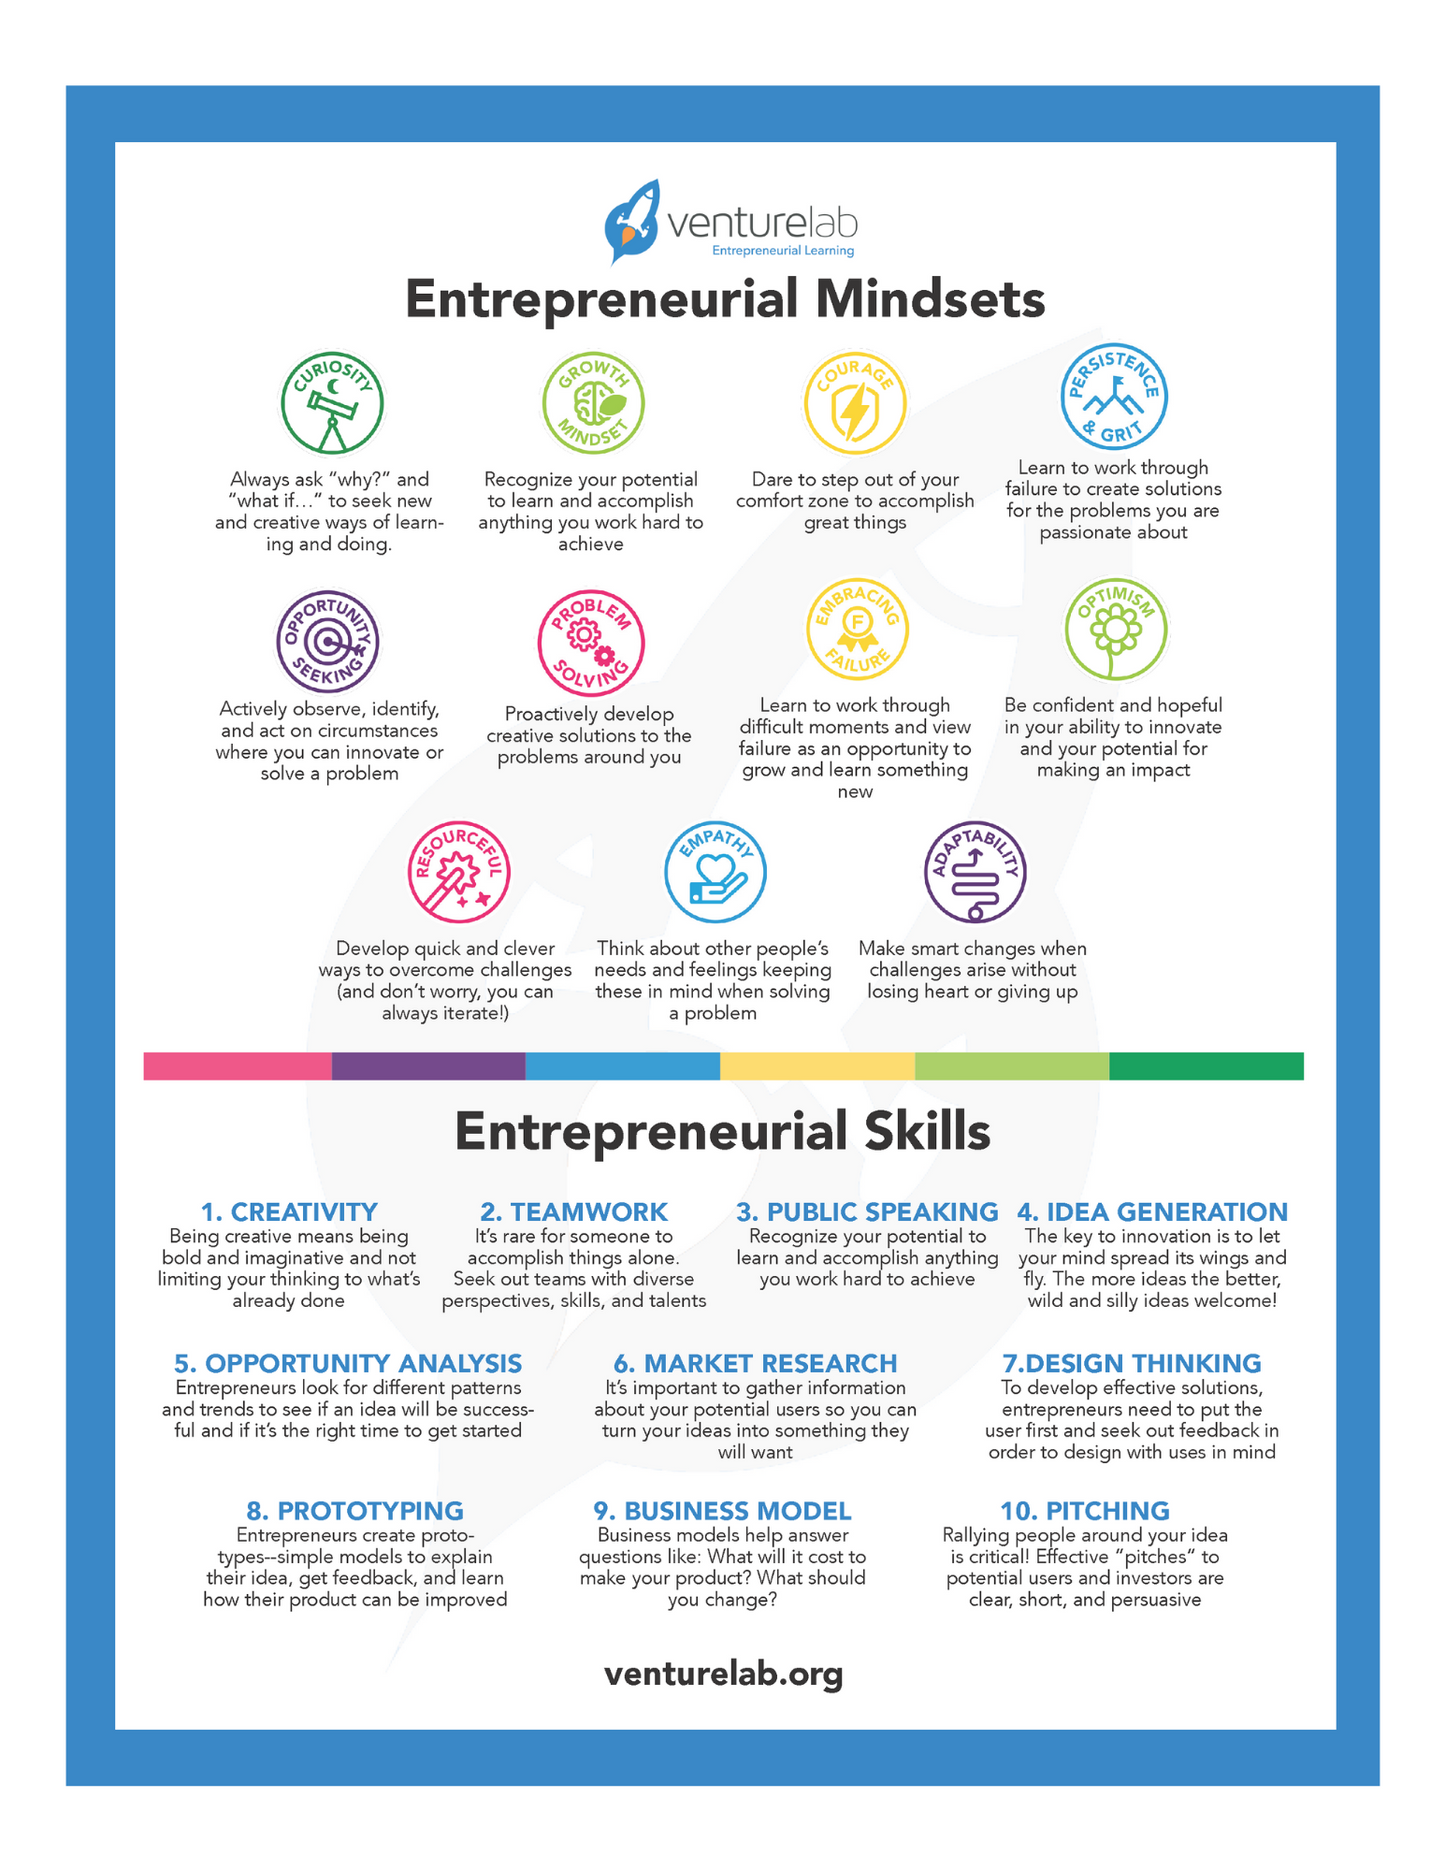 VentureLab Entrepreneurial Mindset Poster Grades 6-12, size 8.5x11